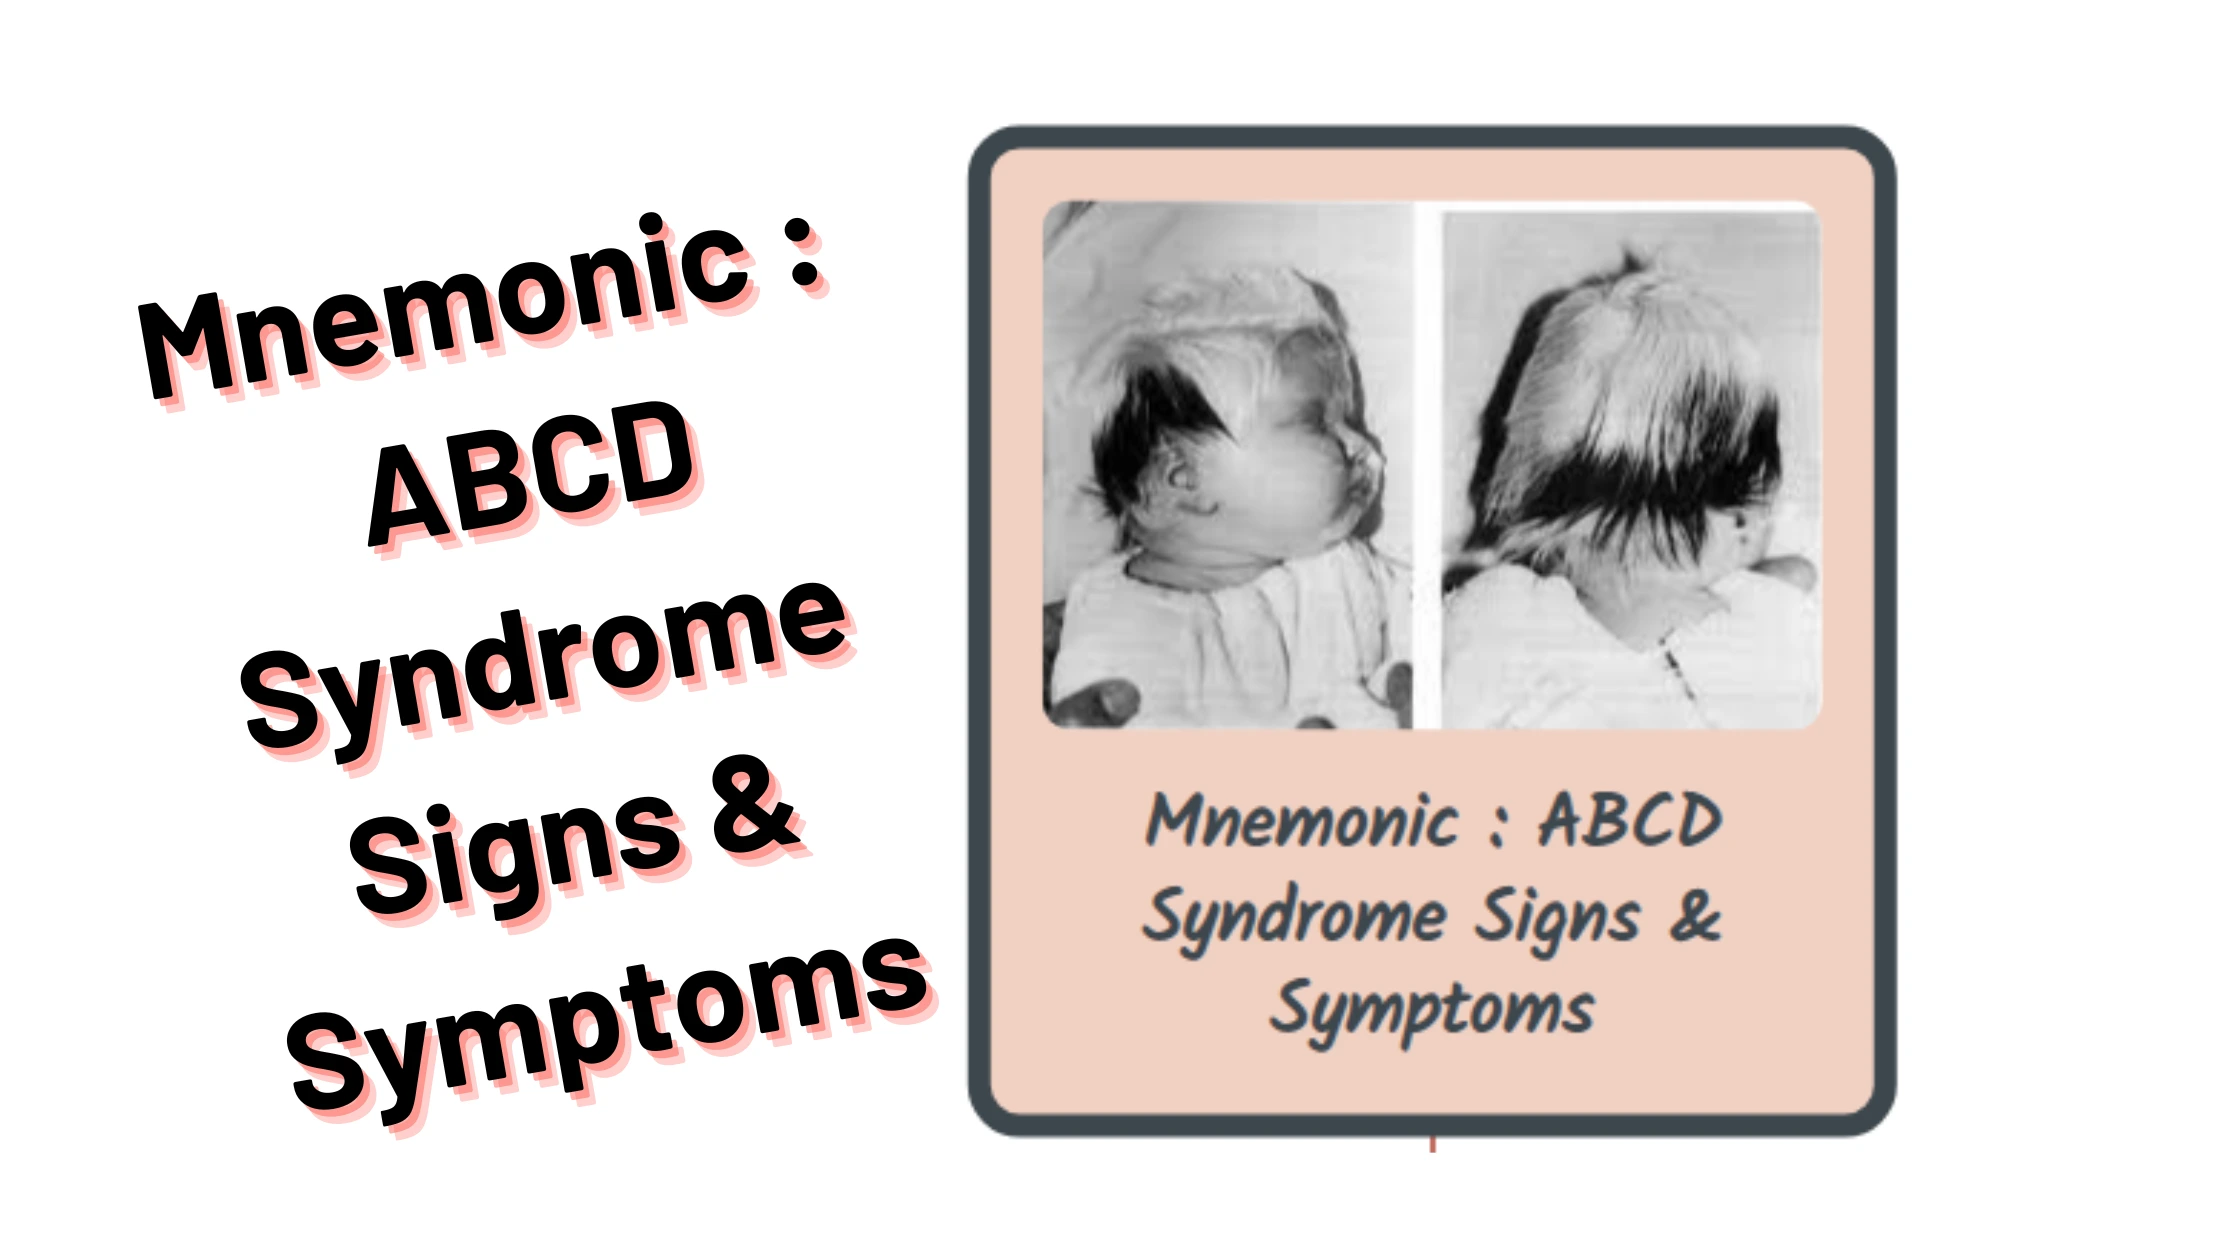 ABCD Syndrome Signs & Symptoms Medical & Nursing Mnemonics